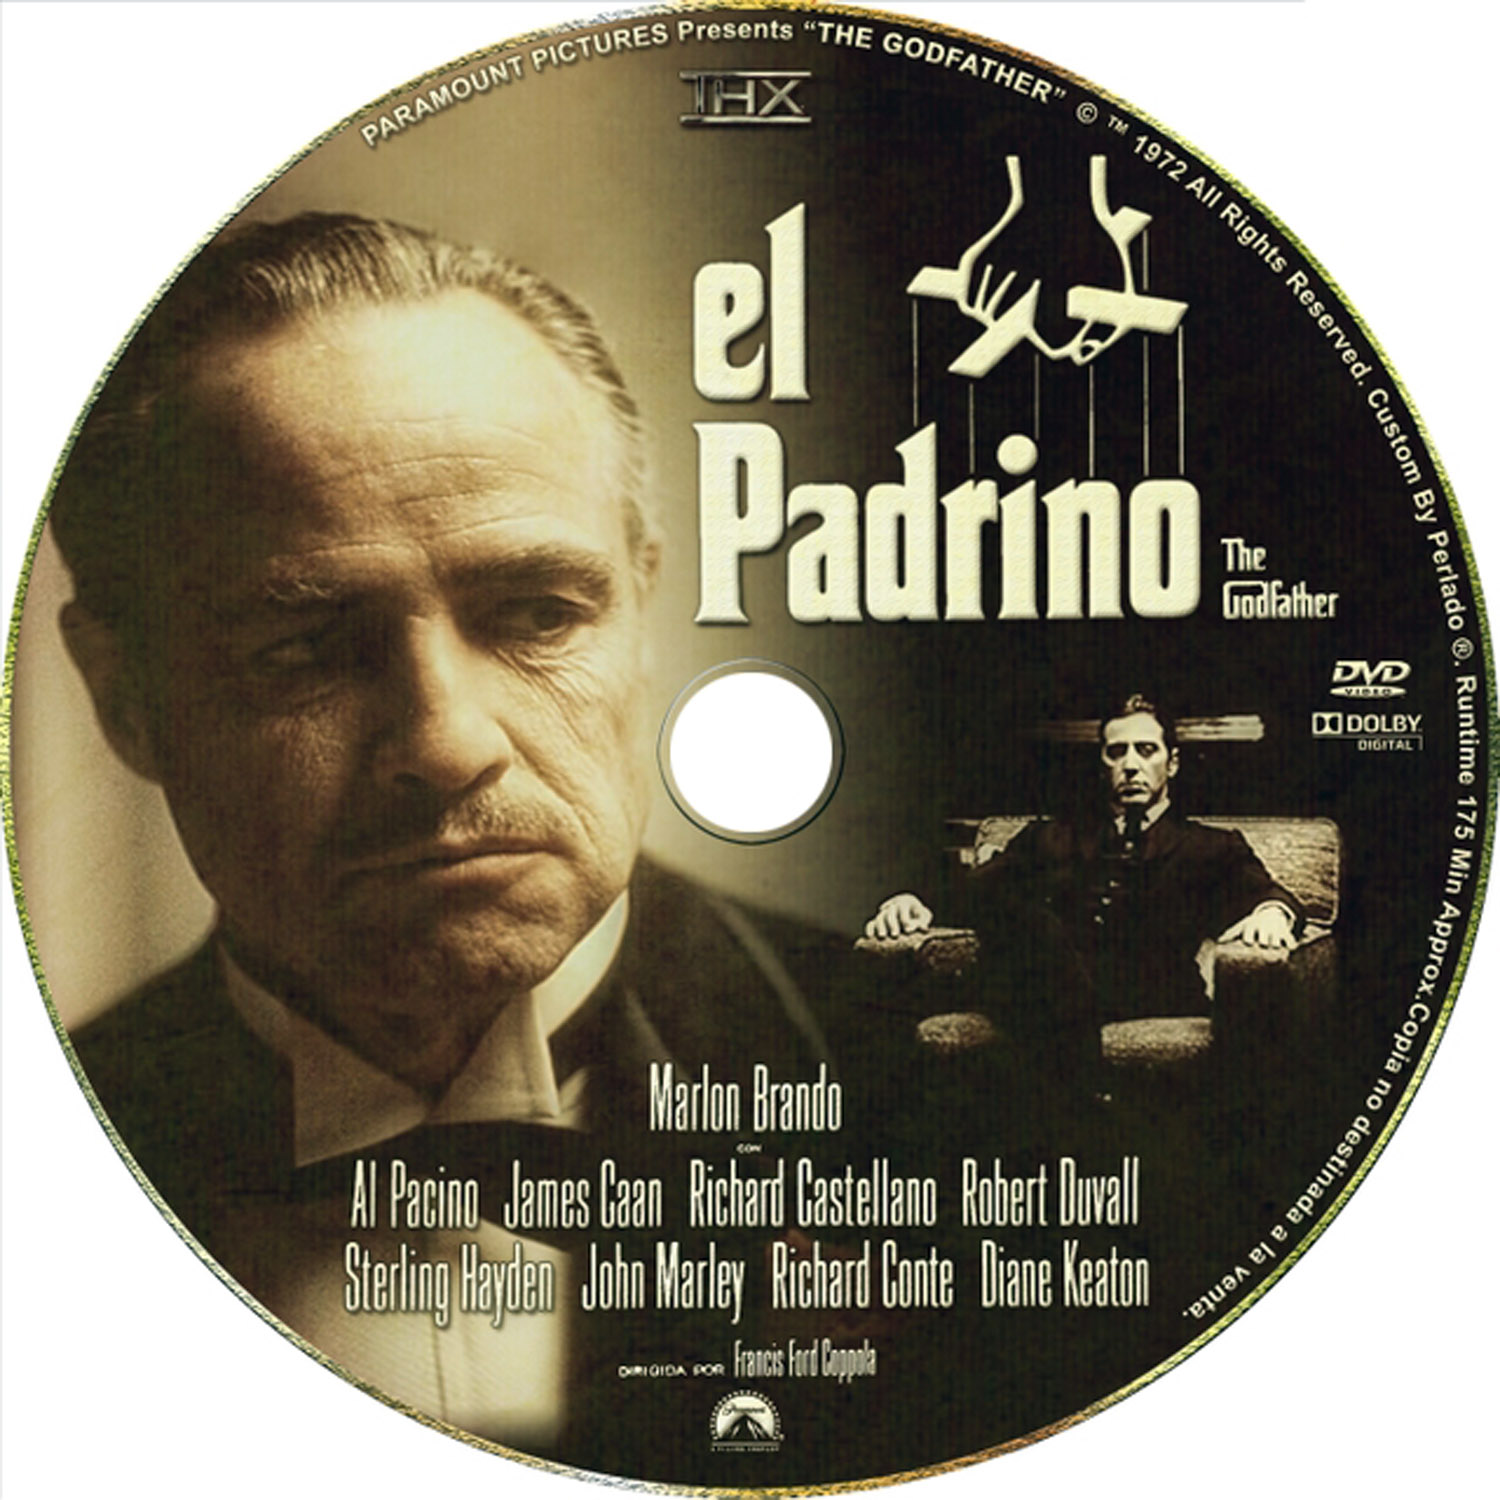 El Padrino The Godfather DVD Label Art